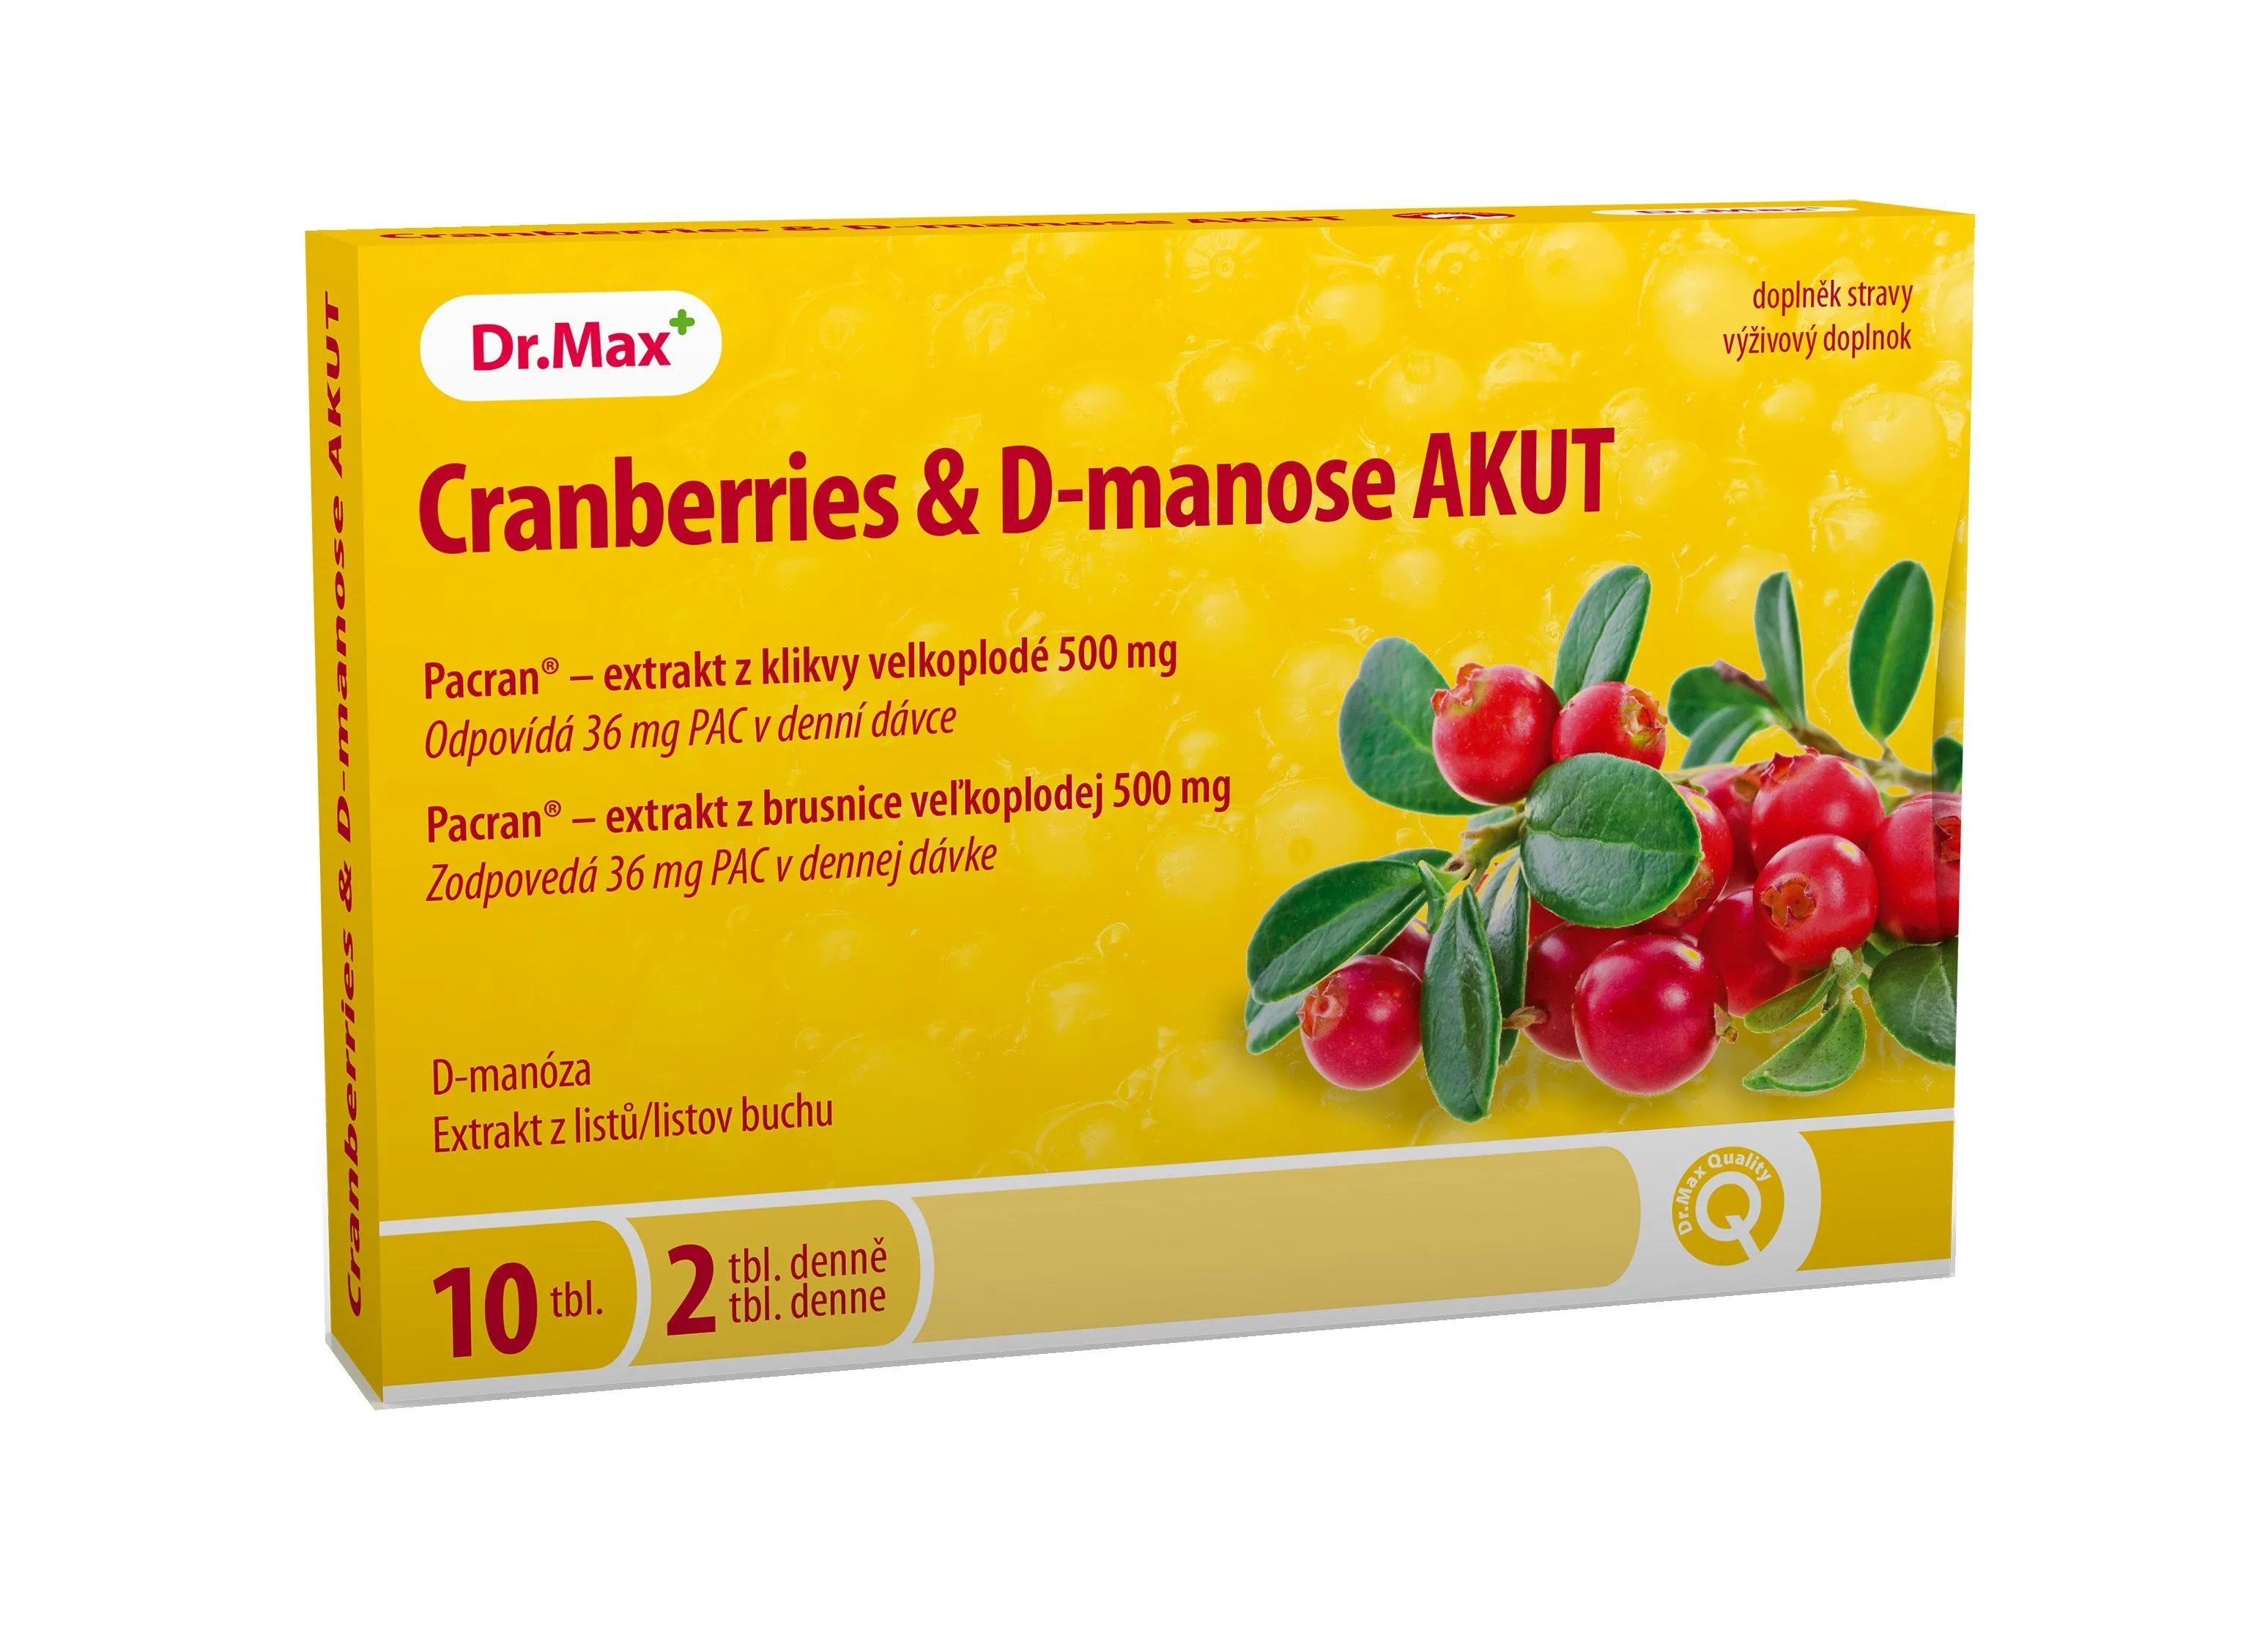 Dr. Max Cranberries & D-manose AKUT 10 tablet